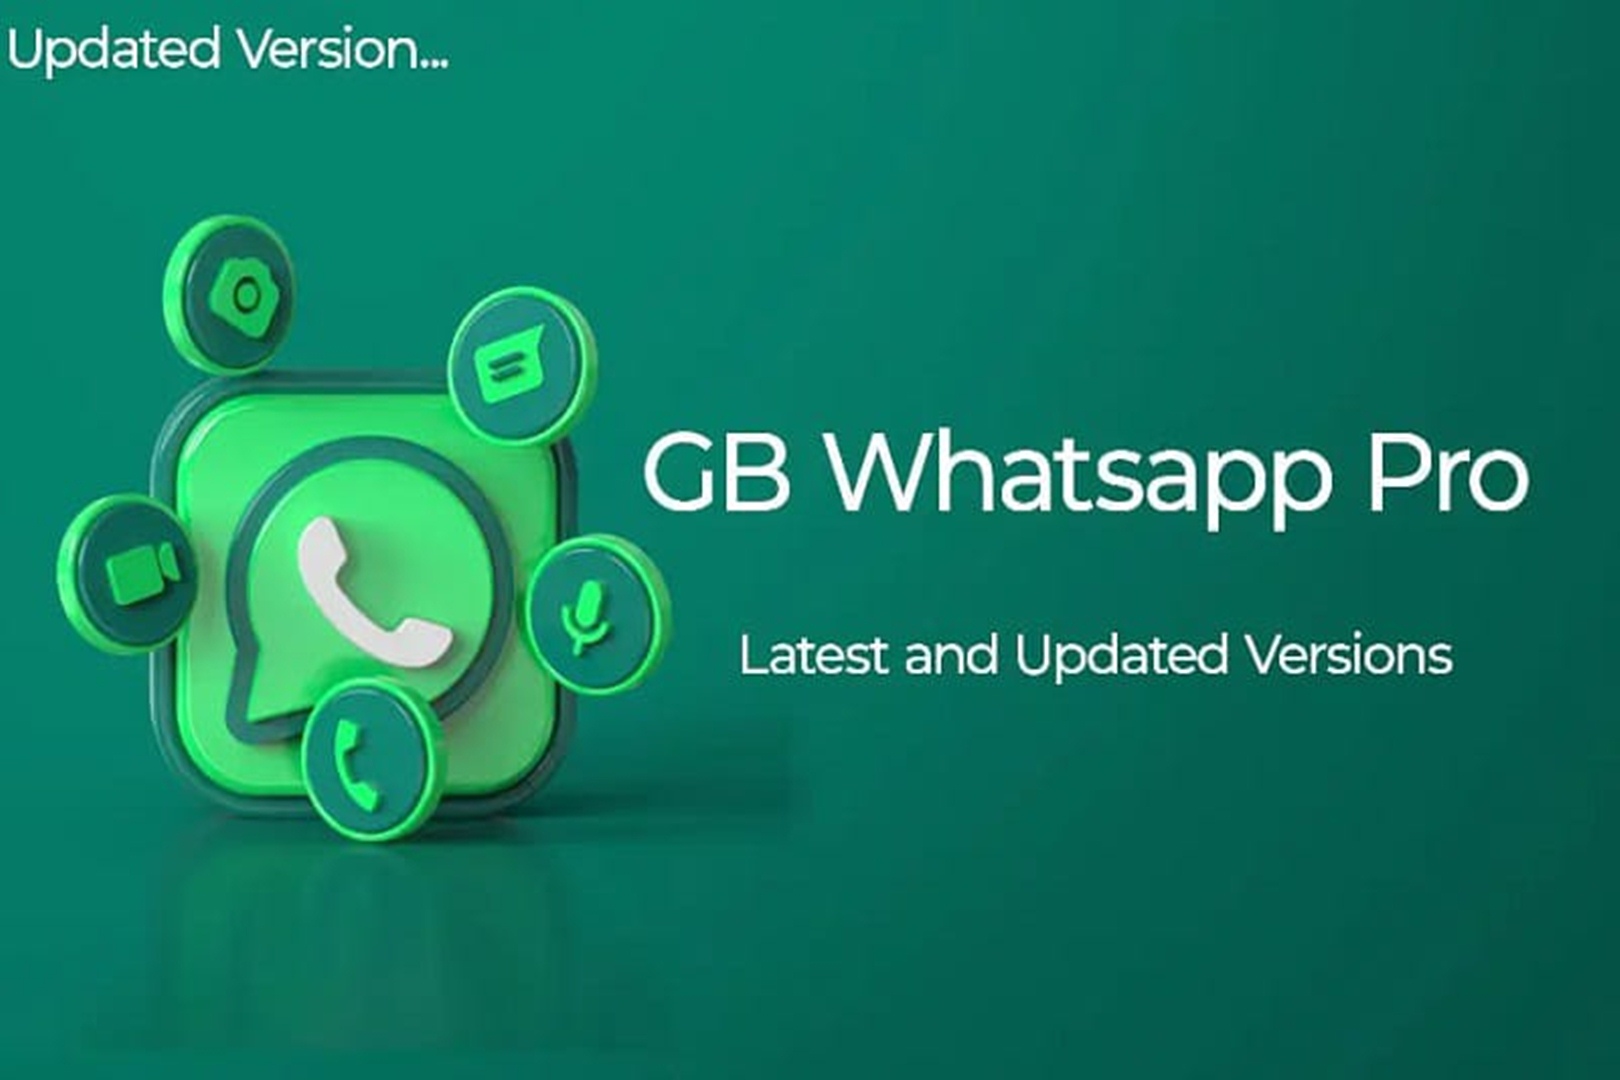 Anti Blokir! Download GB Whatsapp Pro V15.10, Canggihnya Kirim pesan WA Tanpa Harus Simpan Kontak